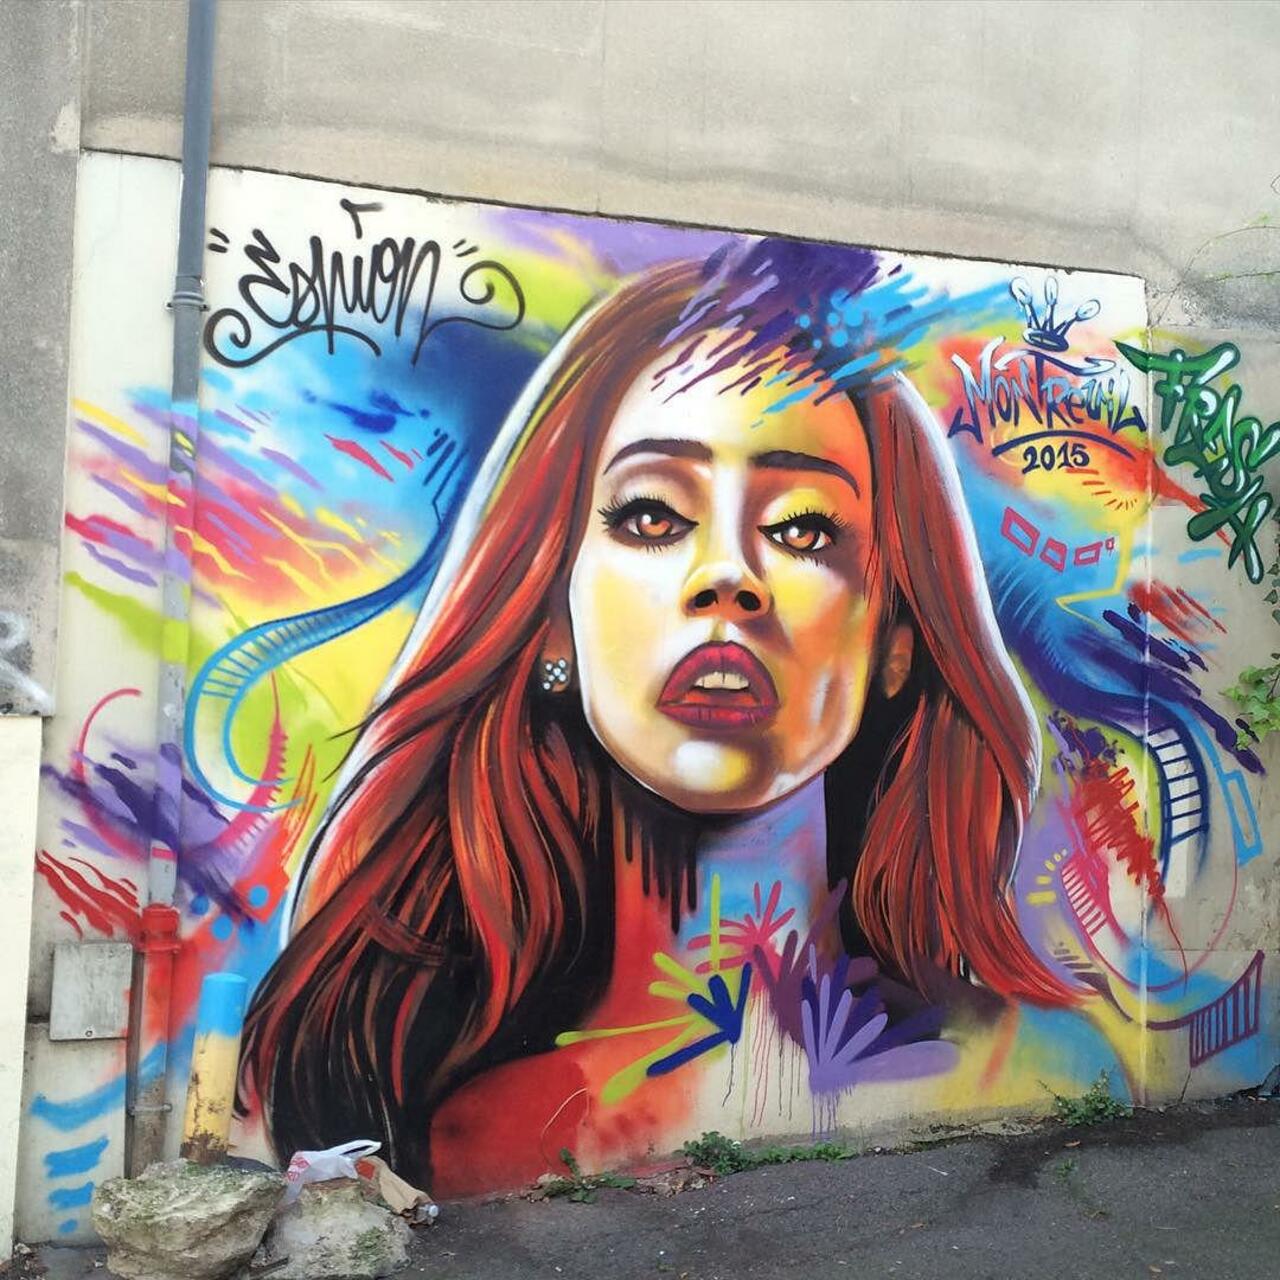 #Paris #graffiti photo by @elricoelmagnifico http://ift.tt/1VQMxVk #StreetArt http://t.co/lUaVEaFvAa